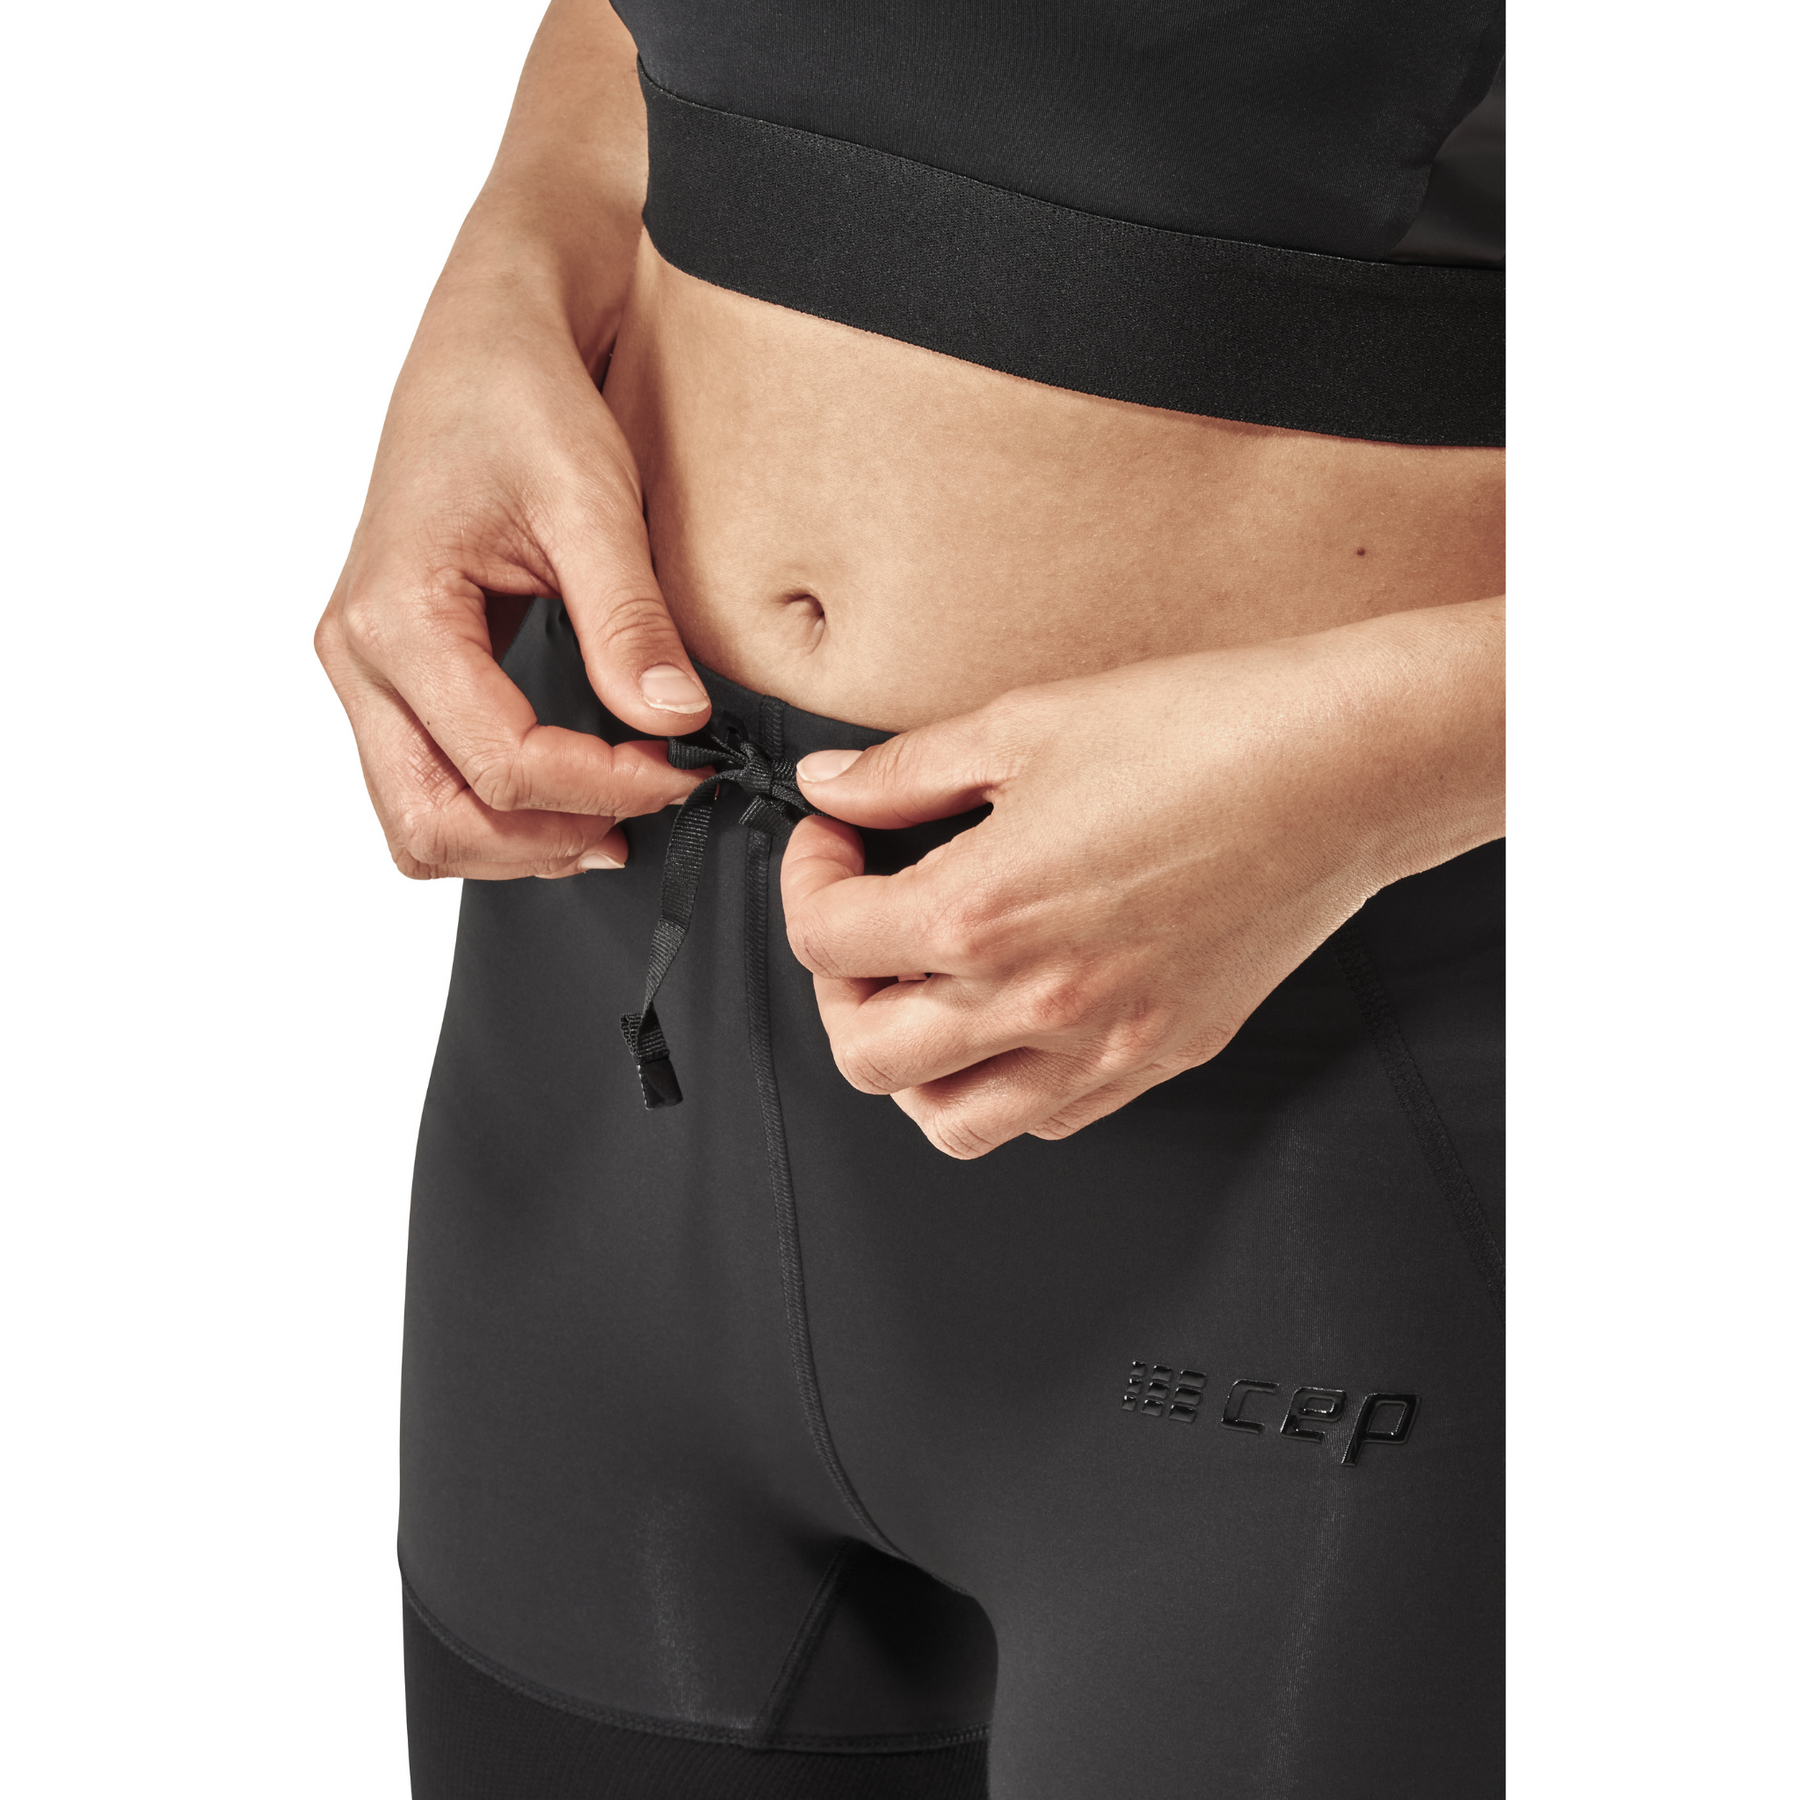 Women's compression shorts Kempa Attitude Pro - Compression garments -  Protections - Equipment